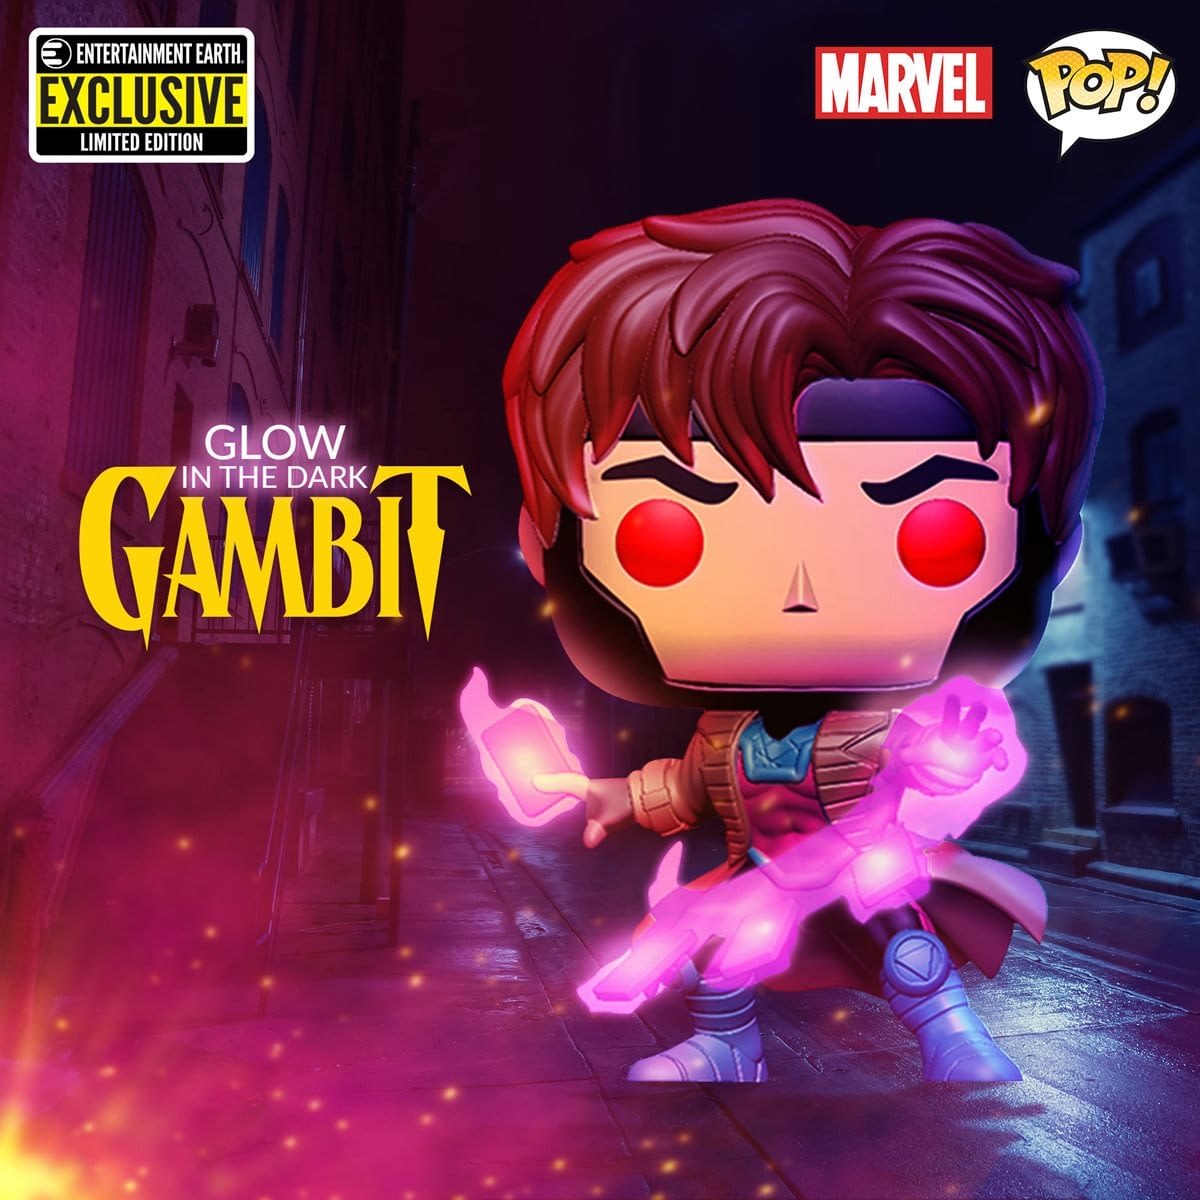 London Toy Fair Funko Pop Reveals - X-Men Rogue and Gambit